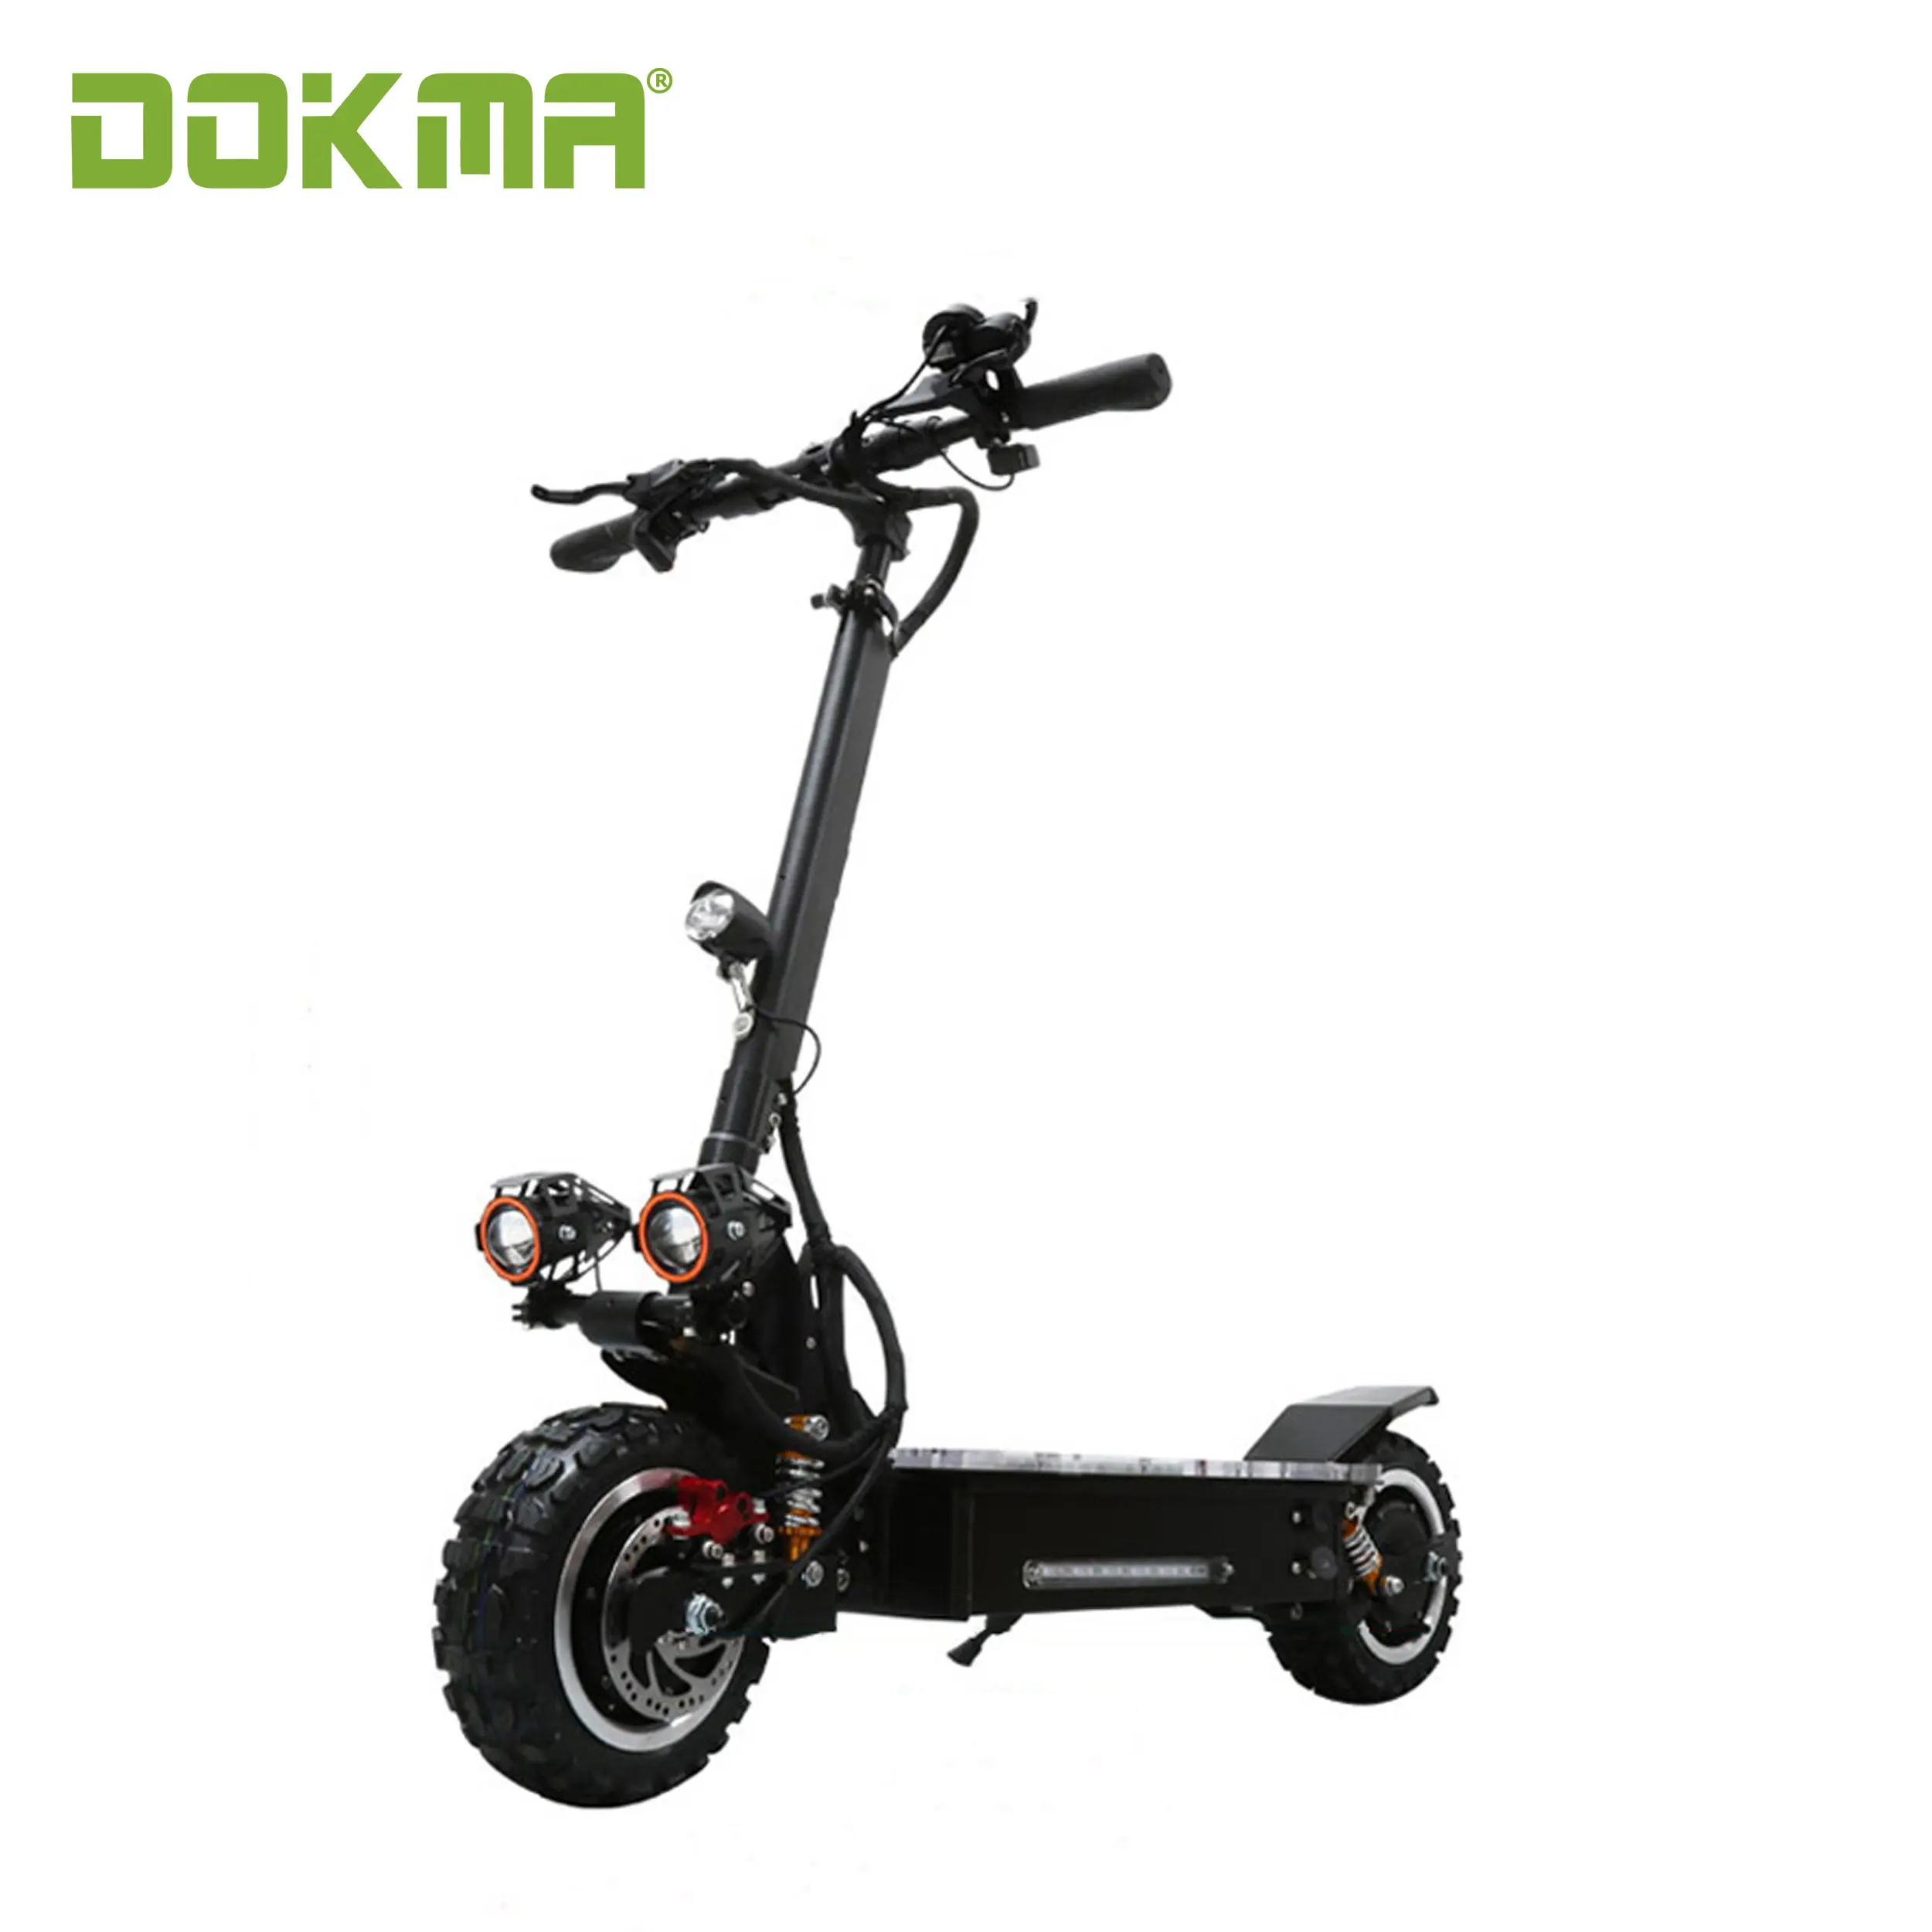 Dokma 2000w 11 بوصة عالية السرعة حملة الدراجة سكوتر كهربائي للطي سكوتر كهربائي للبالغين